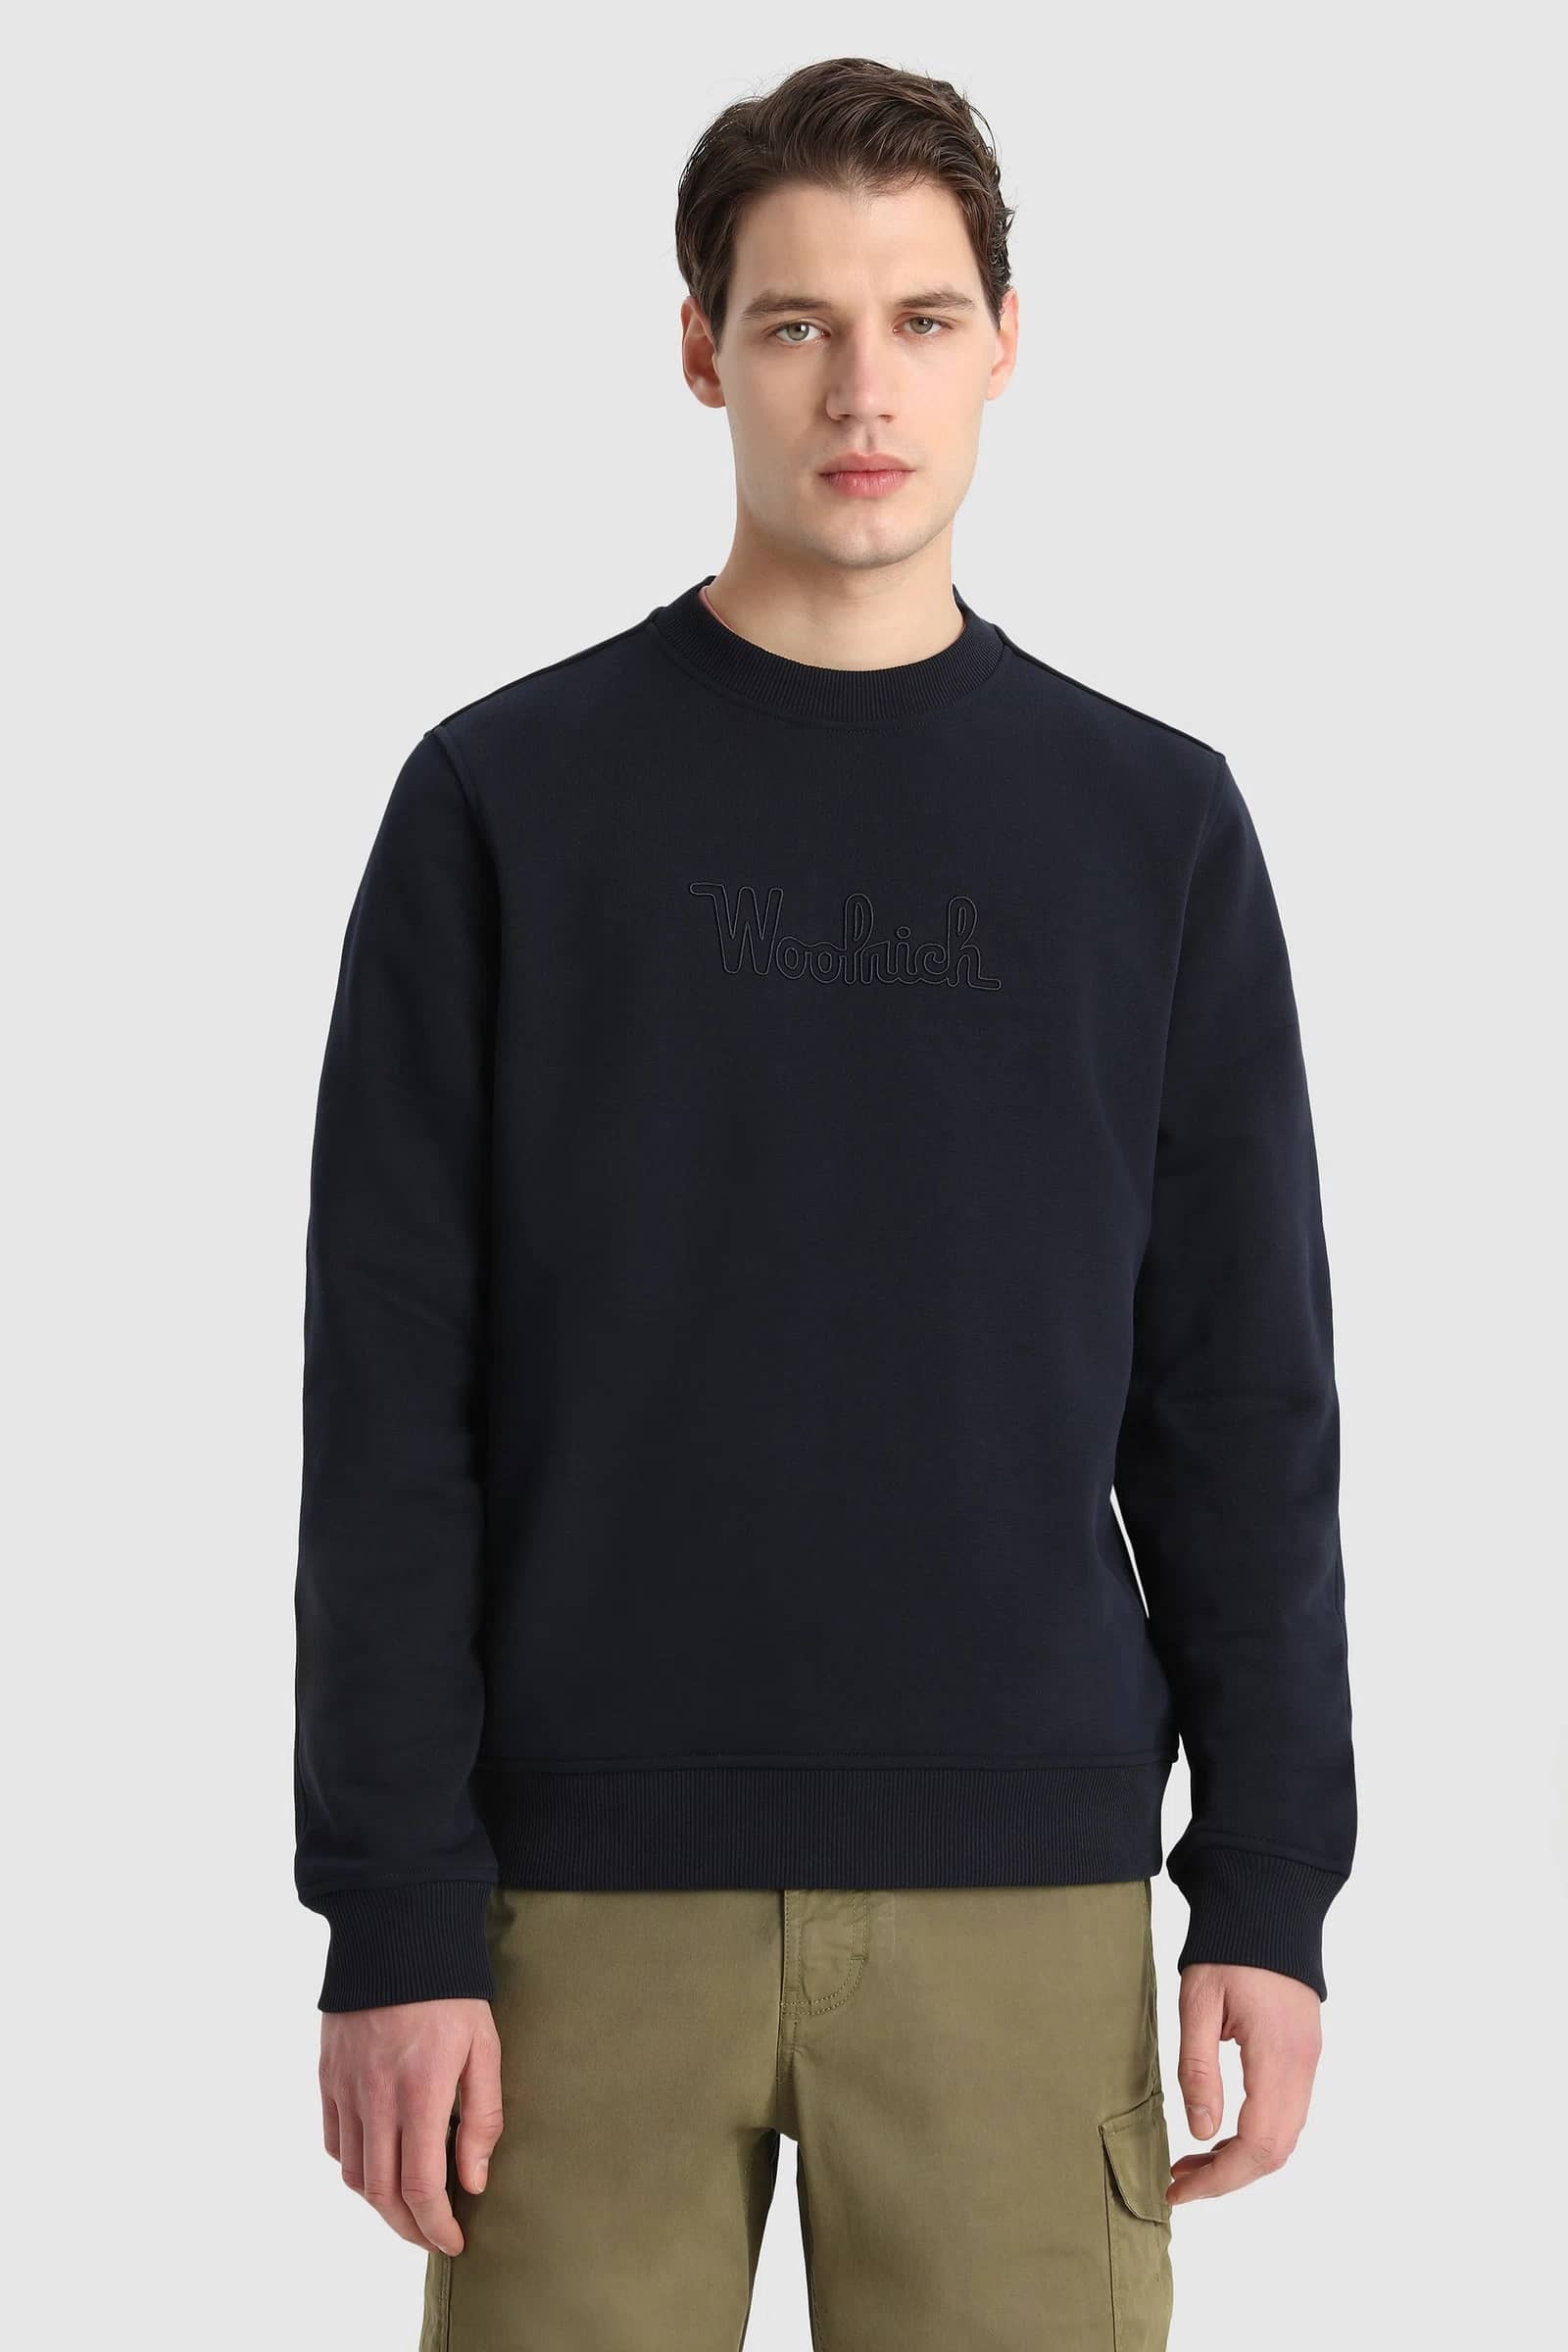 Woolrich Luxury Sweater Navy